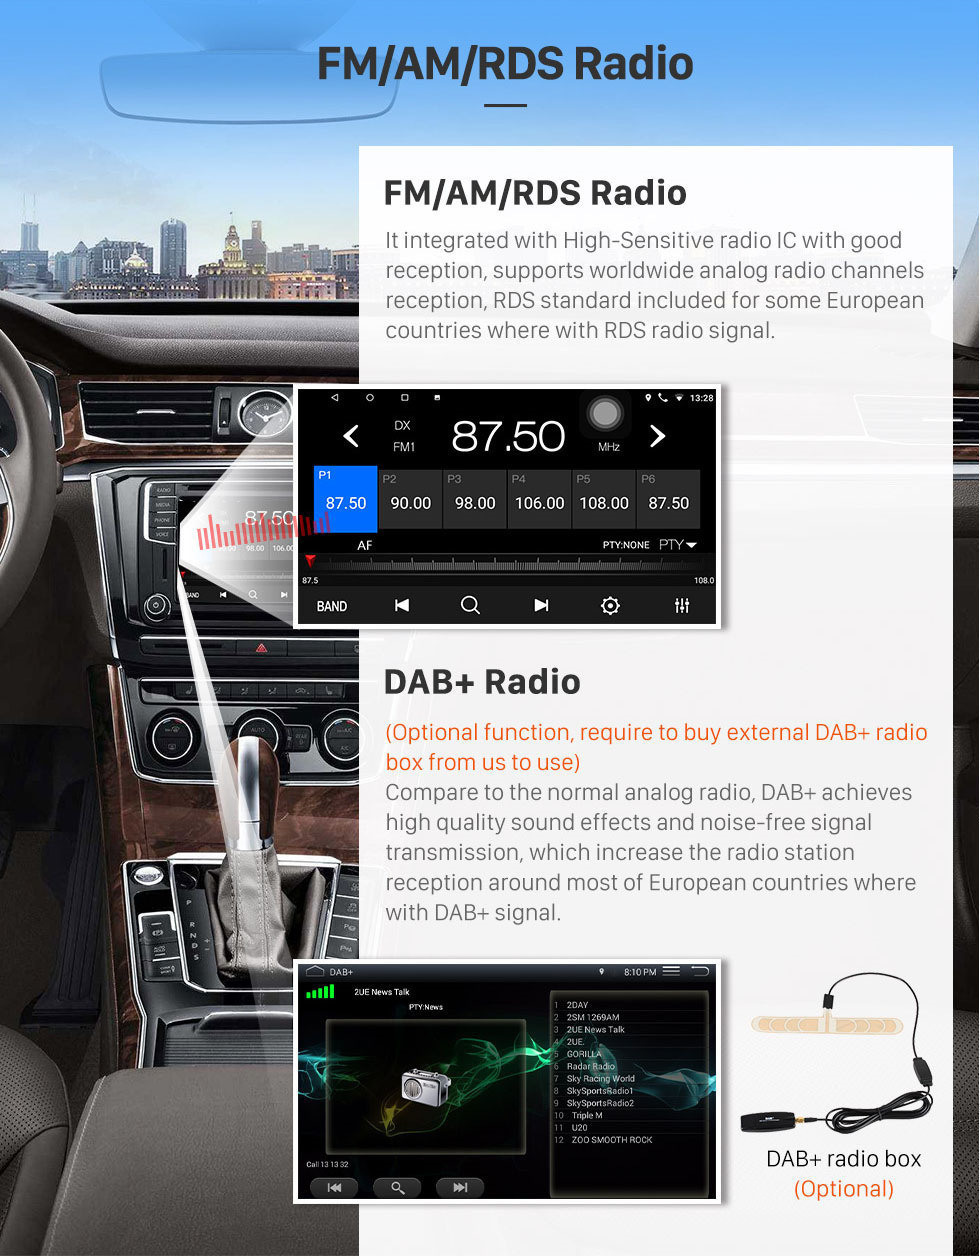 Seicane Heiße verkaufenandroide 10.0 2013-2016 HYUNDAI I10 LHD GPS-Navigations-Auto-Audiosystem-Touch Screen morgens FM Radio Bluetooth Musik 3G WiFi OBD2 Spiegel Link AUX-Backup-Kamera USB